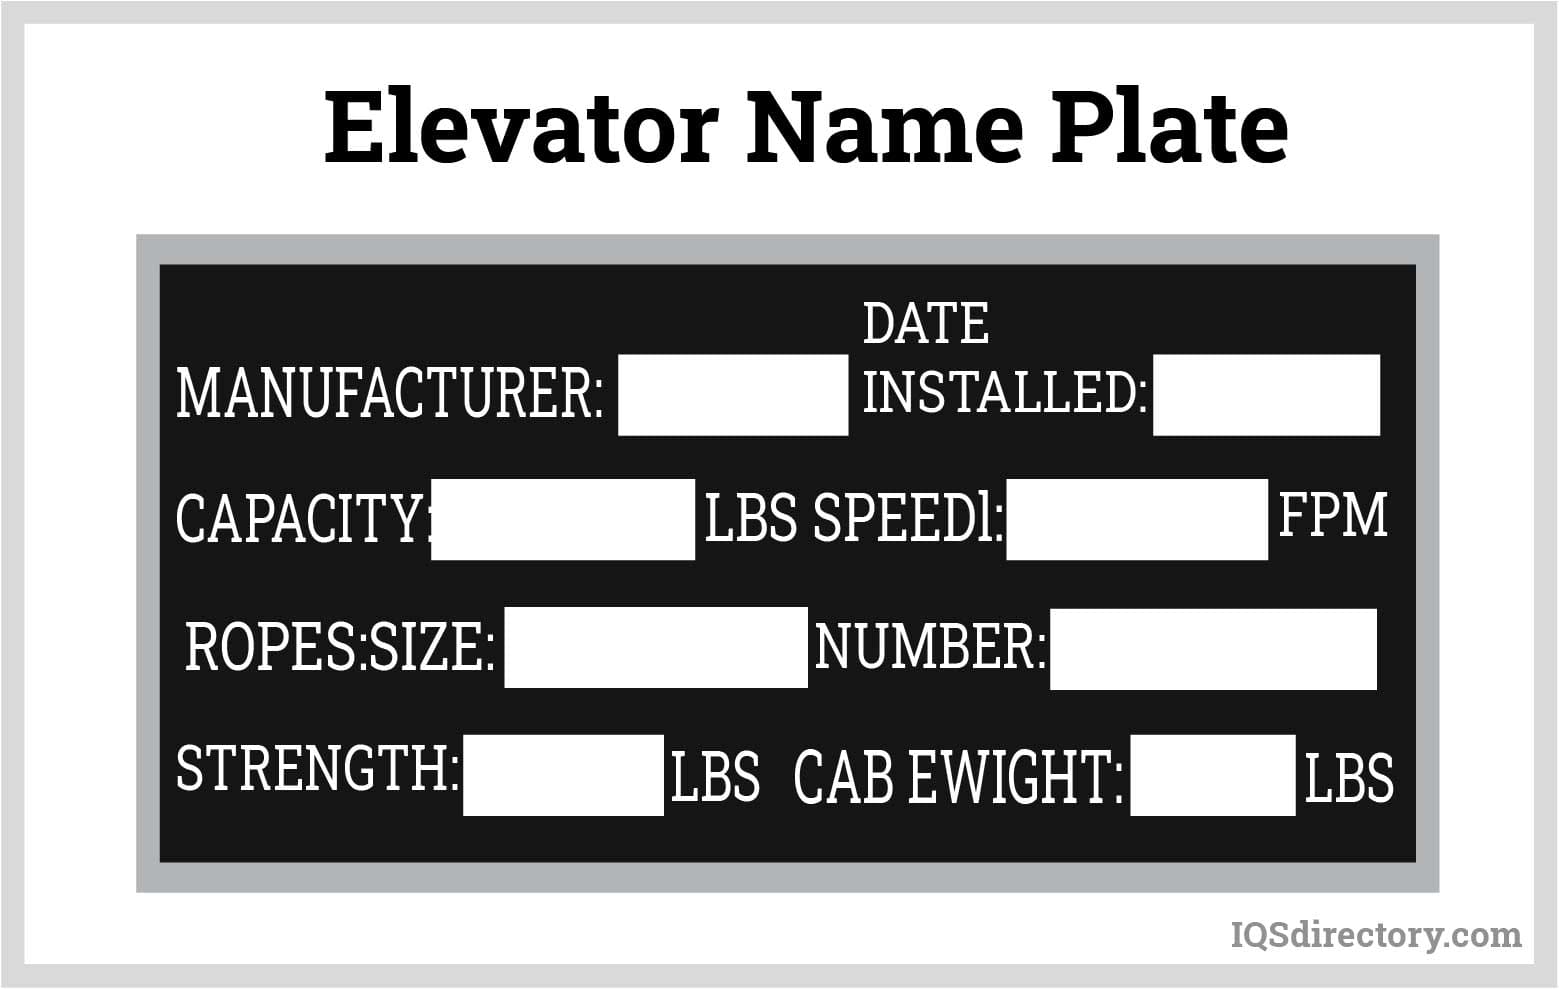 Elevator Name Plate